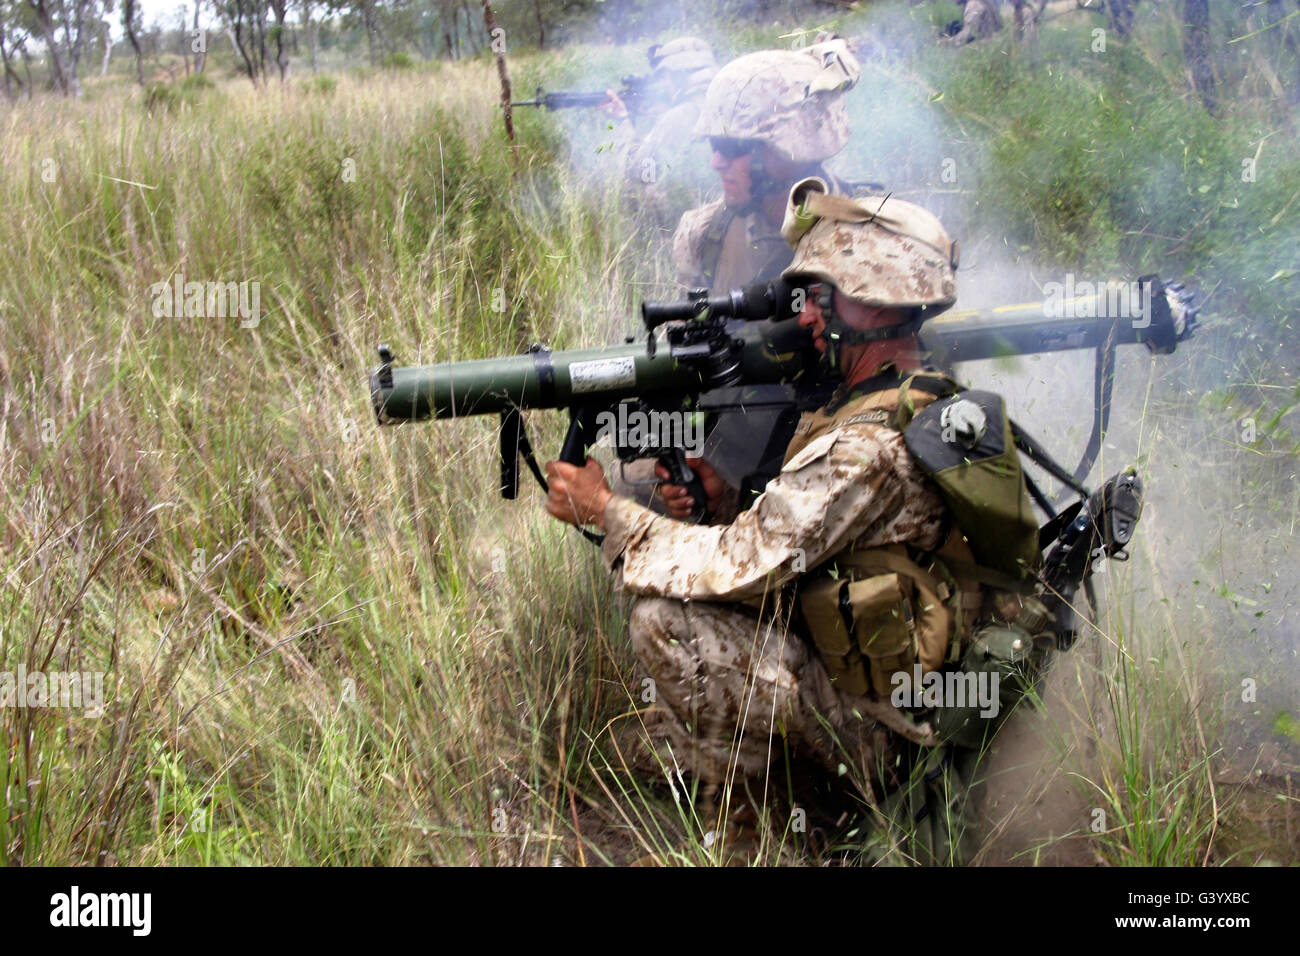 Mortarman feuert eine AT4 Panzerabwehrwaffe. Stockfoto